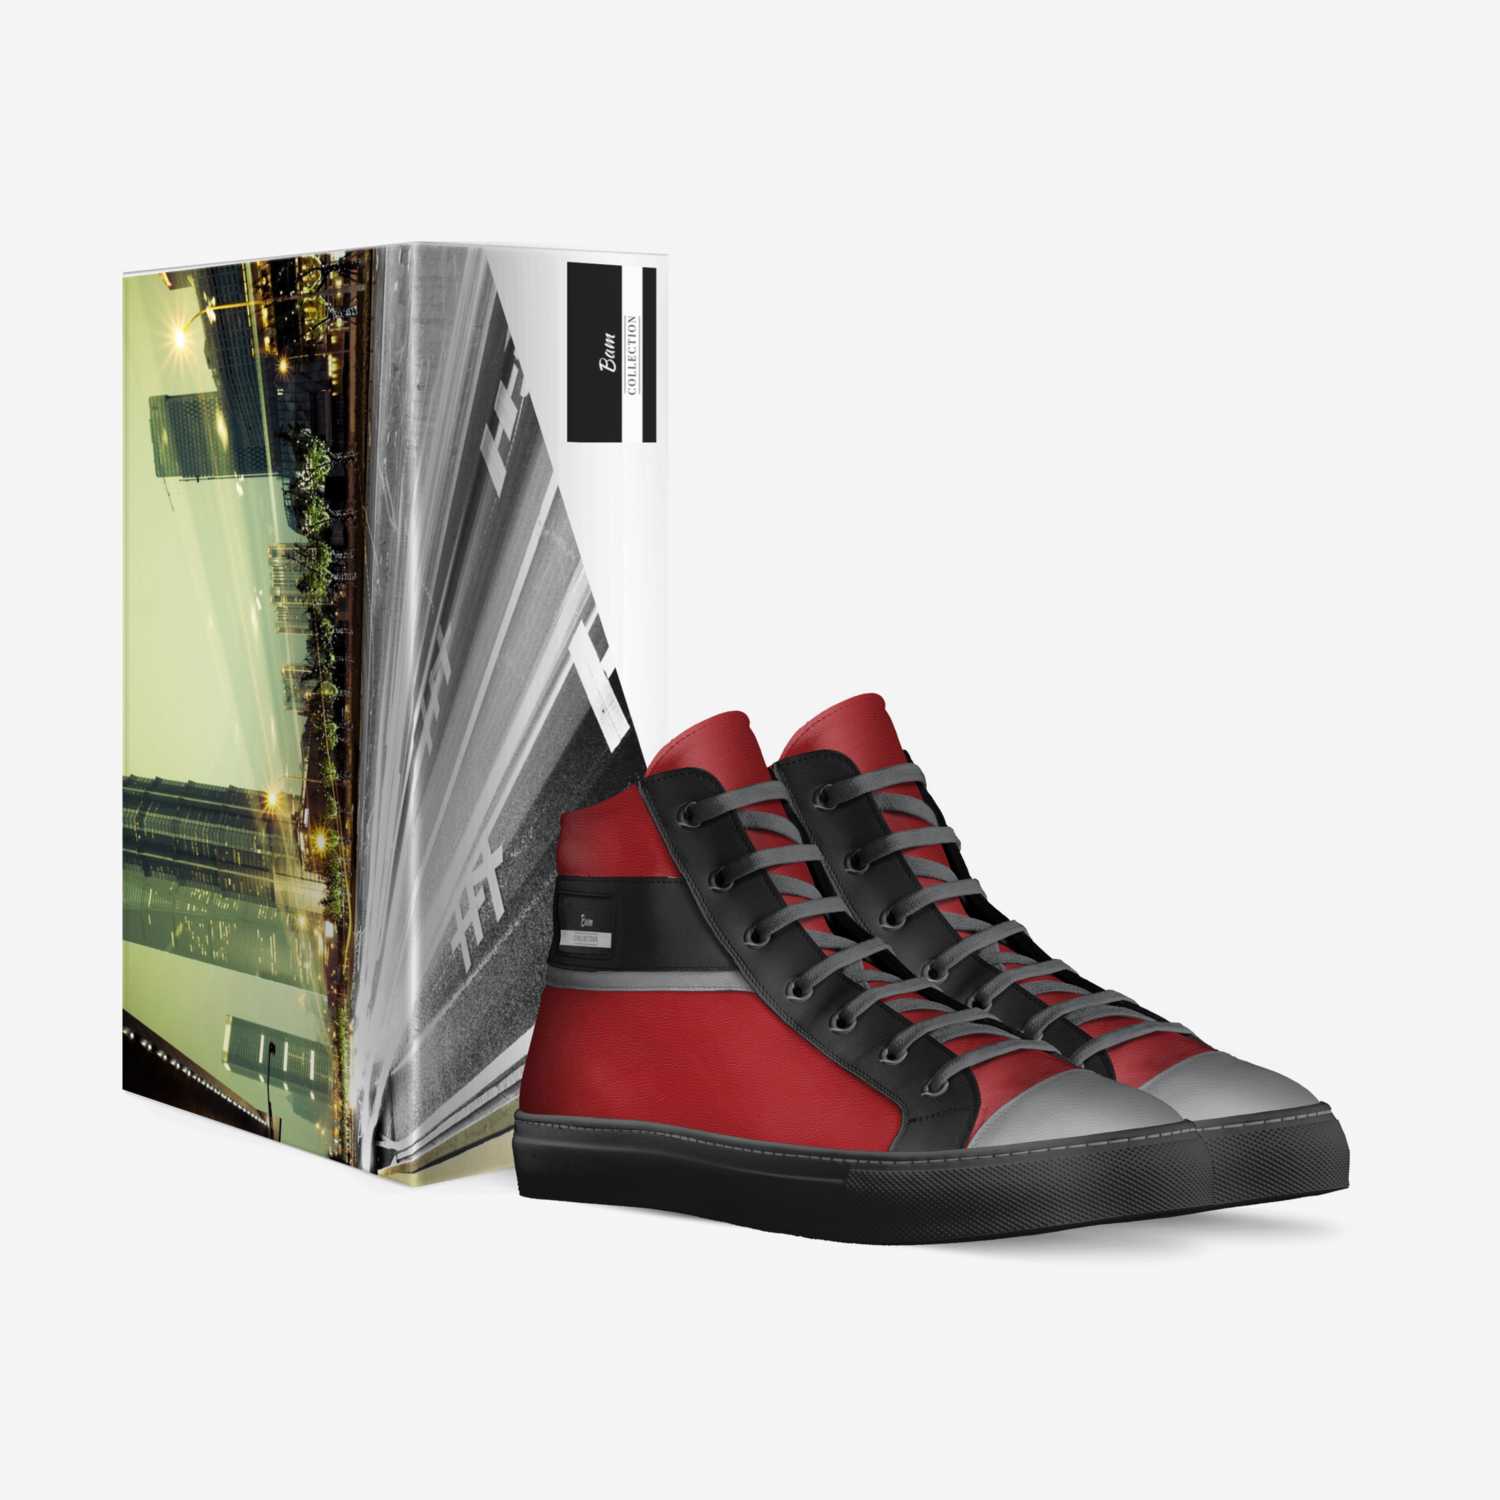 Bam custom made in Italy shoes by Dakota Hensley | Box view